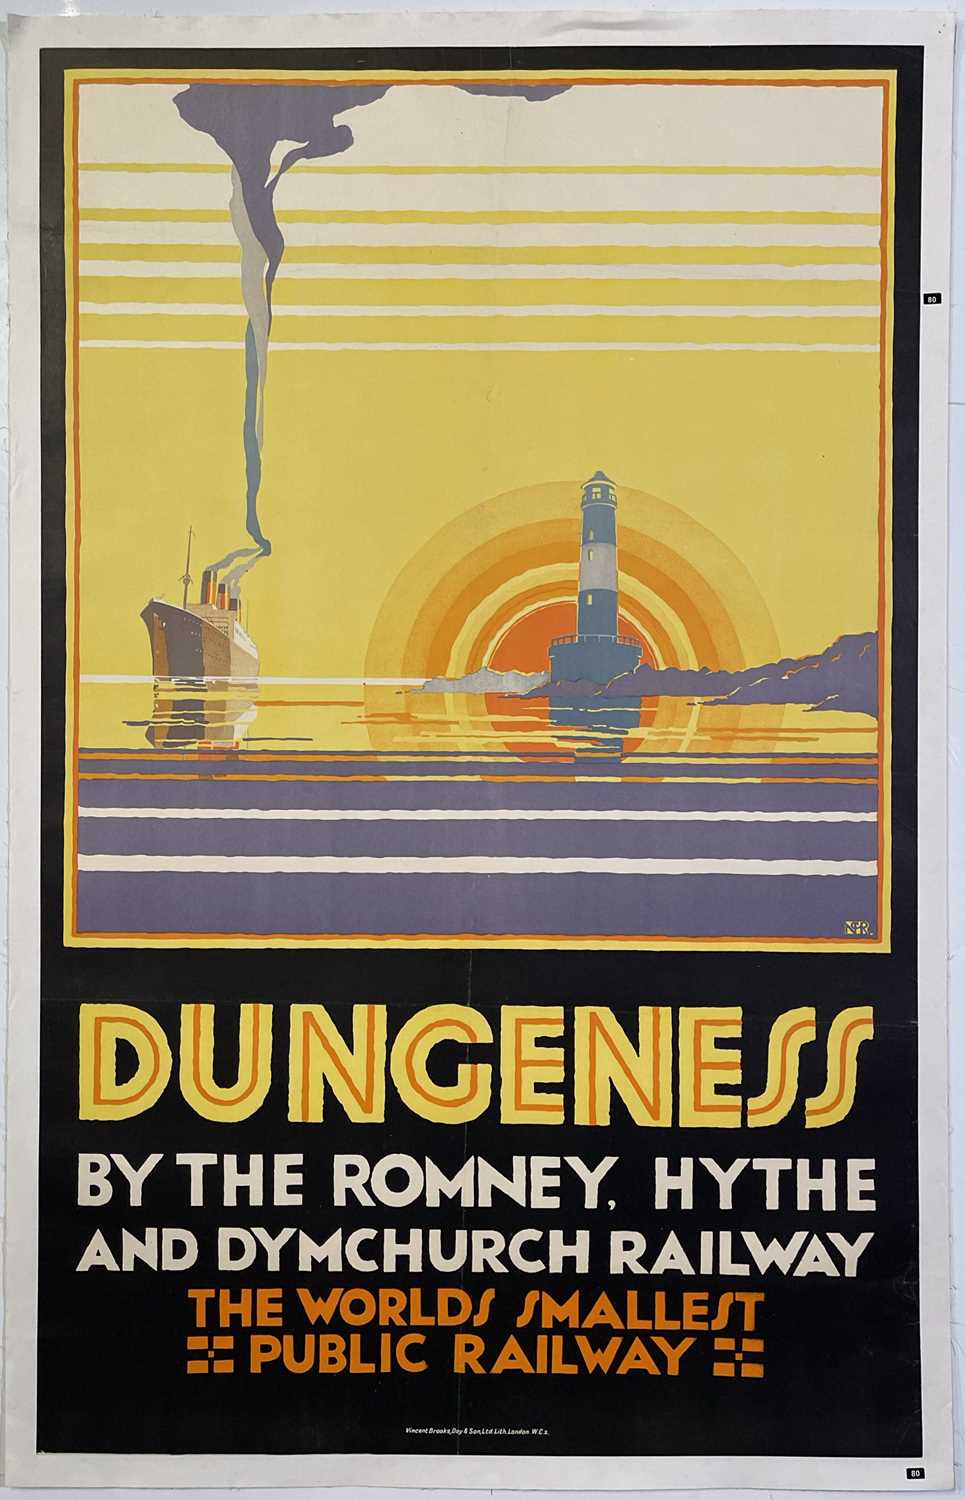 Lot 78 - ADVERTISING / TRAVEL / RAILWAYANA POSTER - DUNGENESS - WORLD'S SMALLEST RAILWAY, 1928.